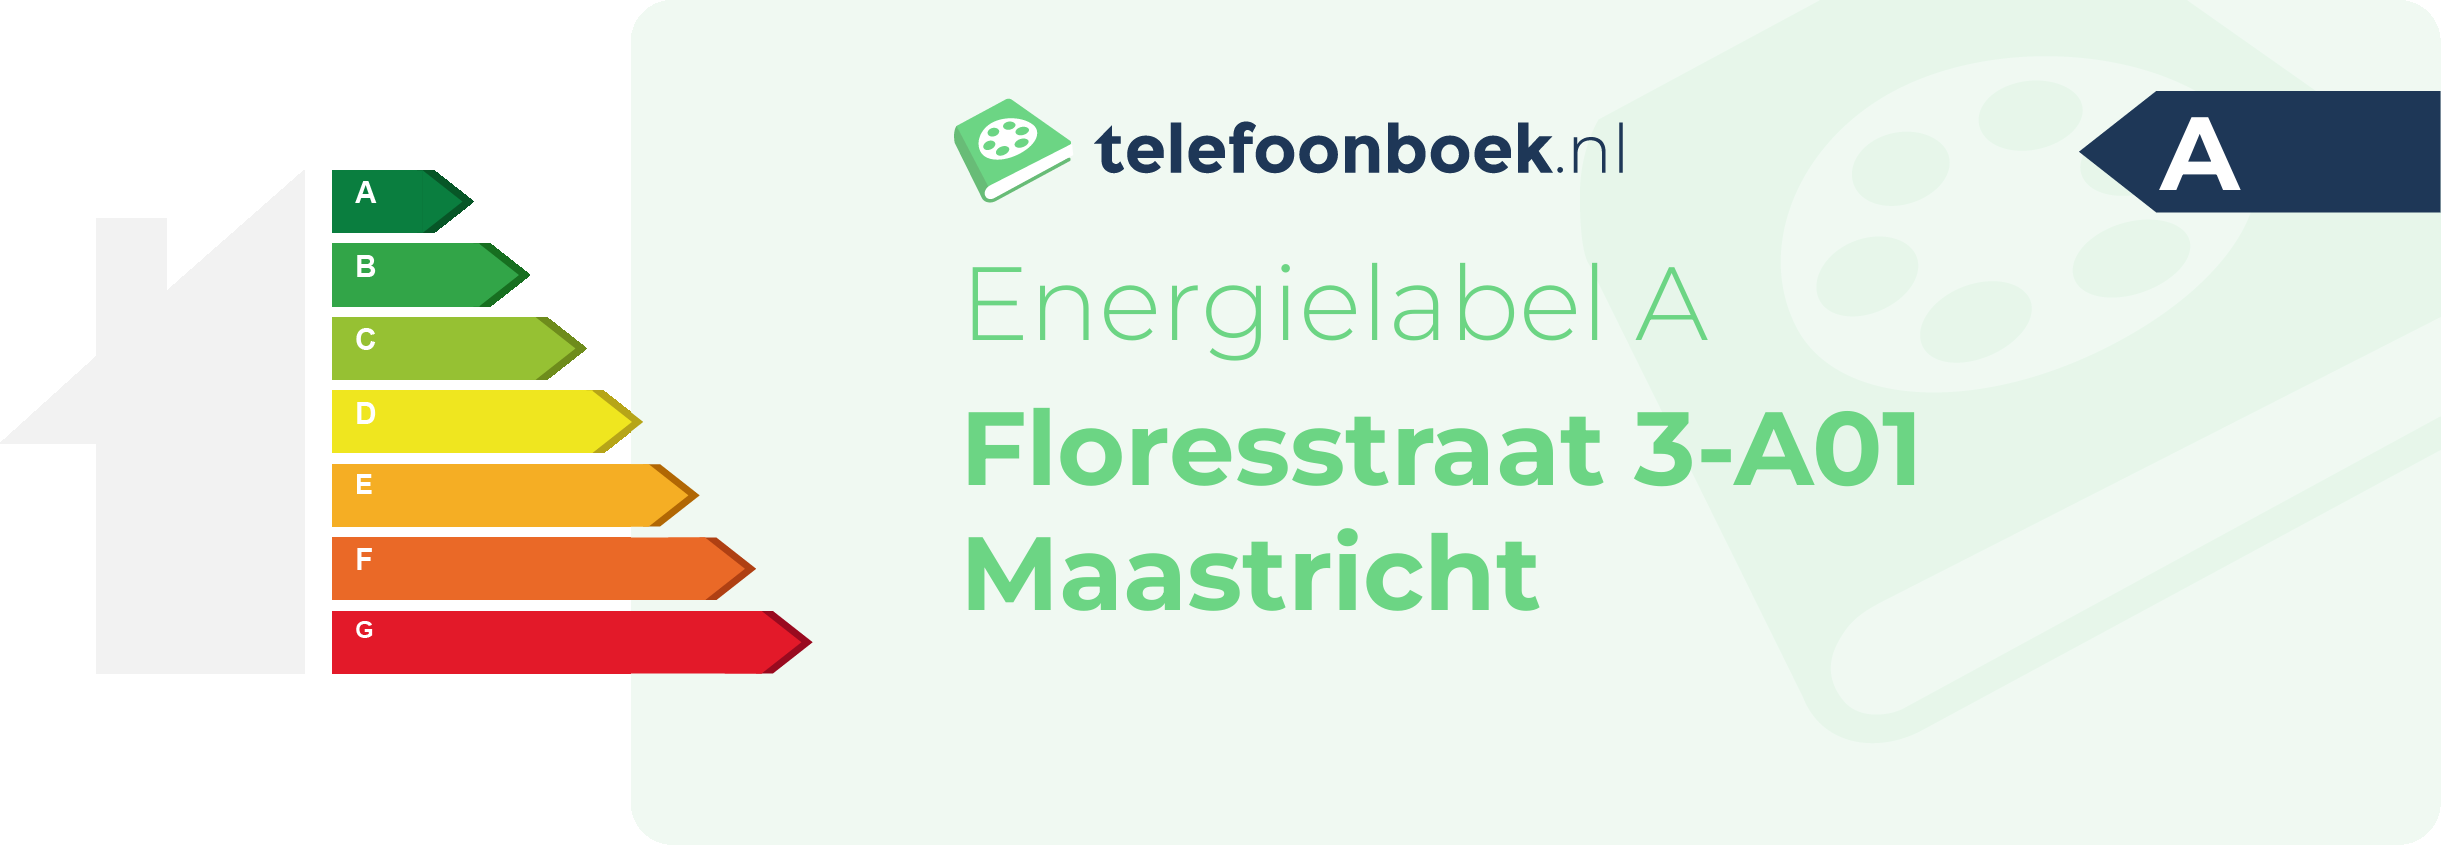 Energielabel Floresstraat 3-A01 Maastricht